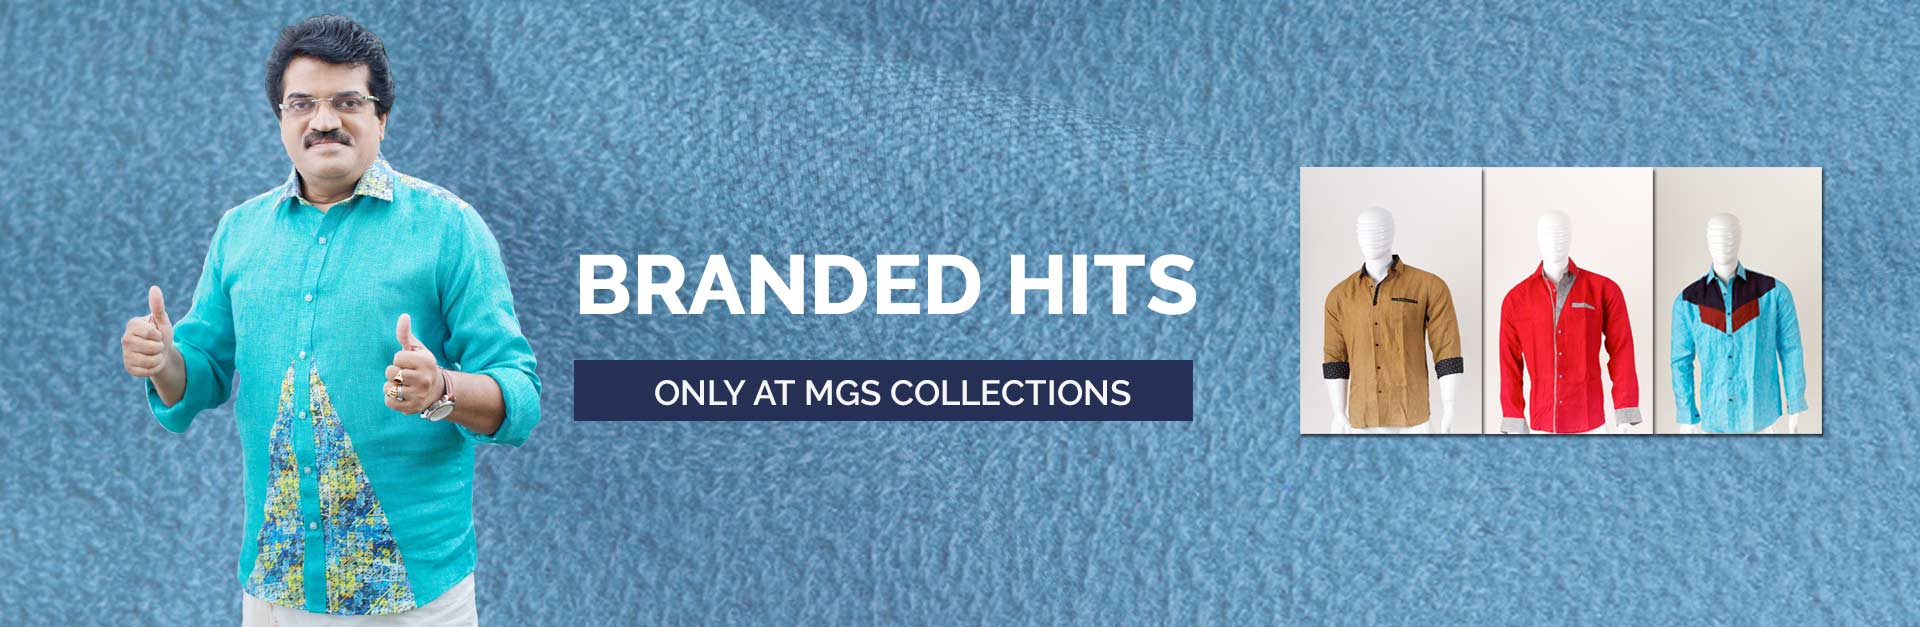 Mg-Shirts-new-classic-hits